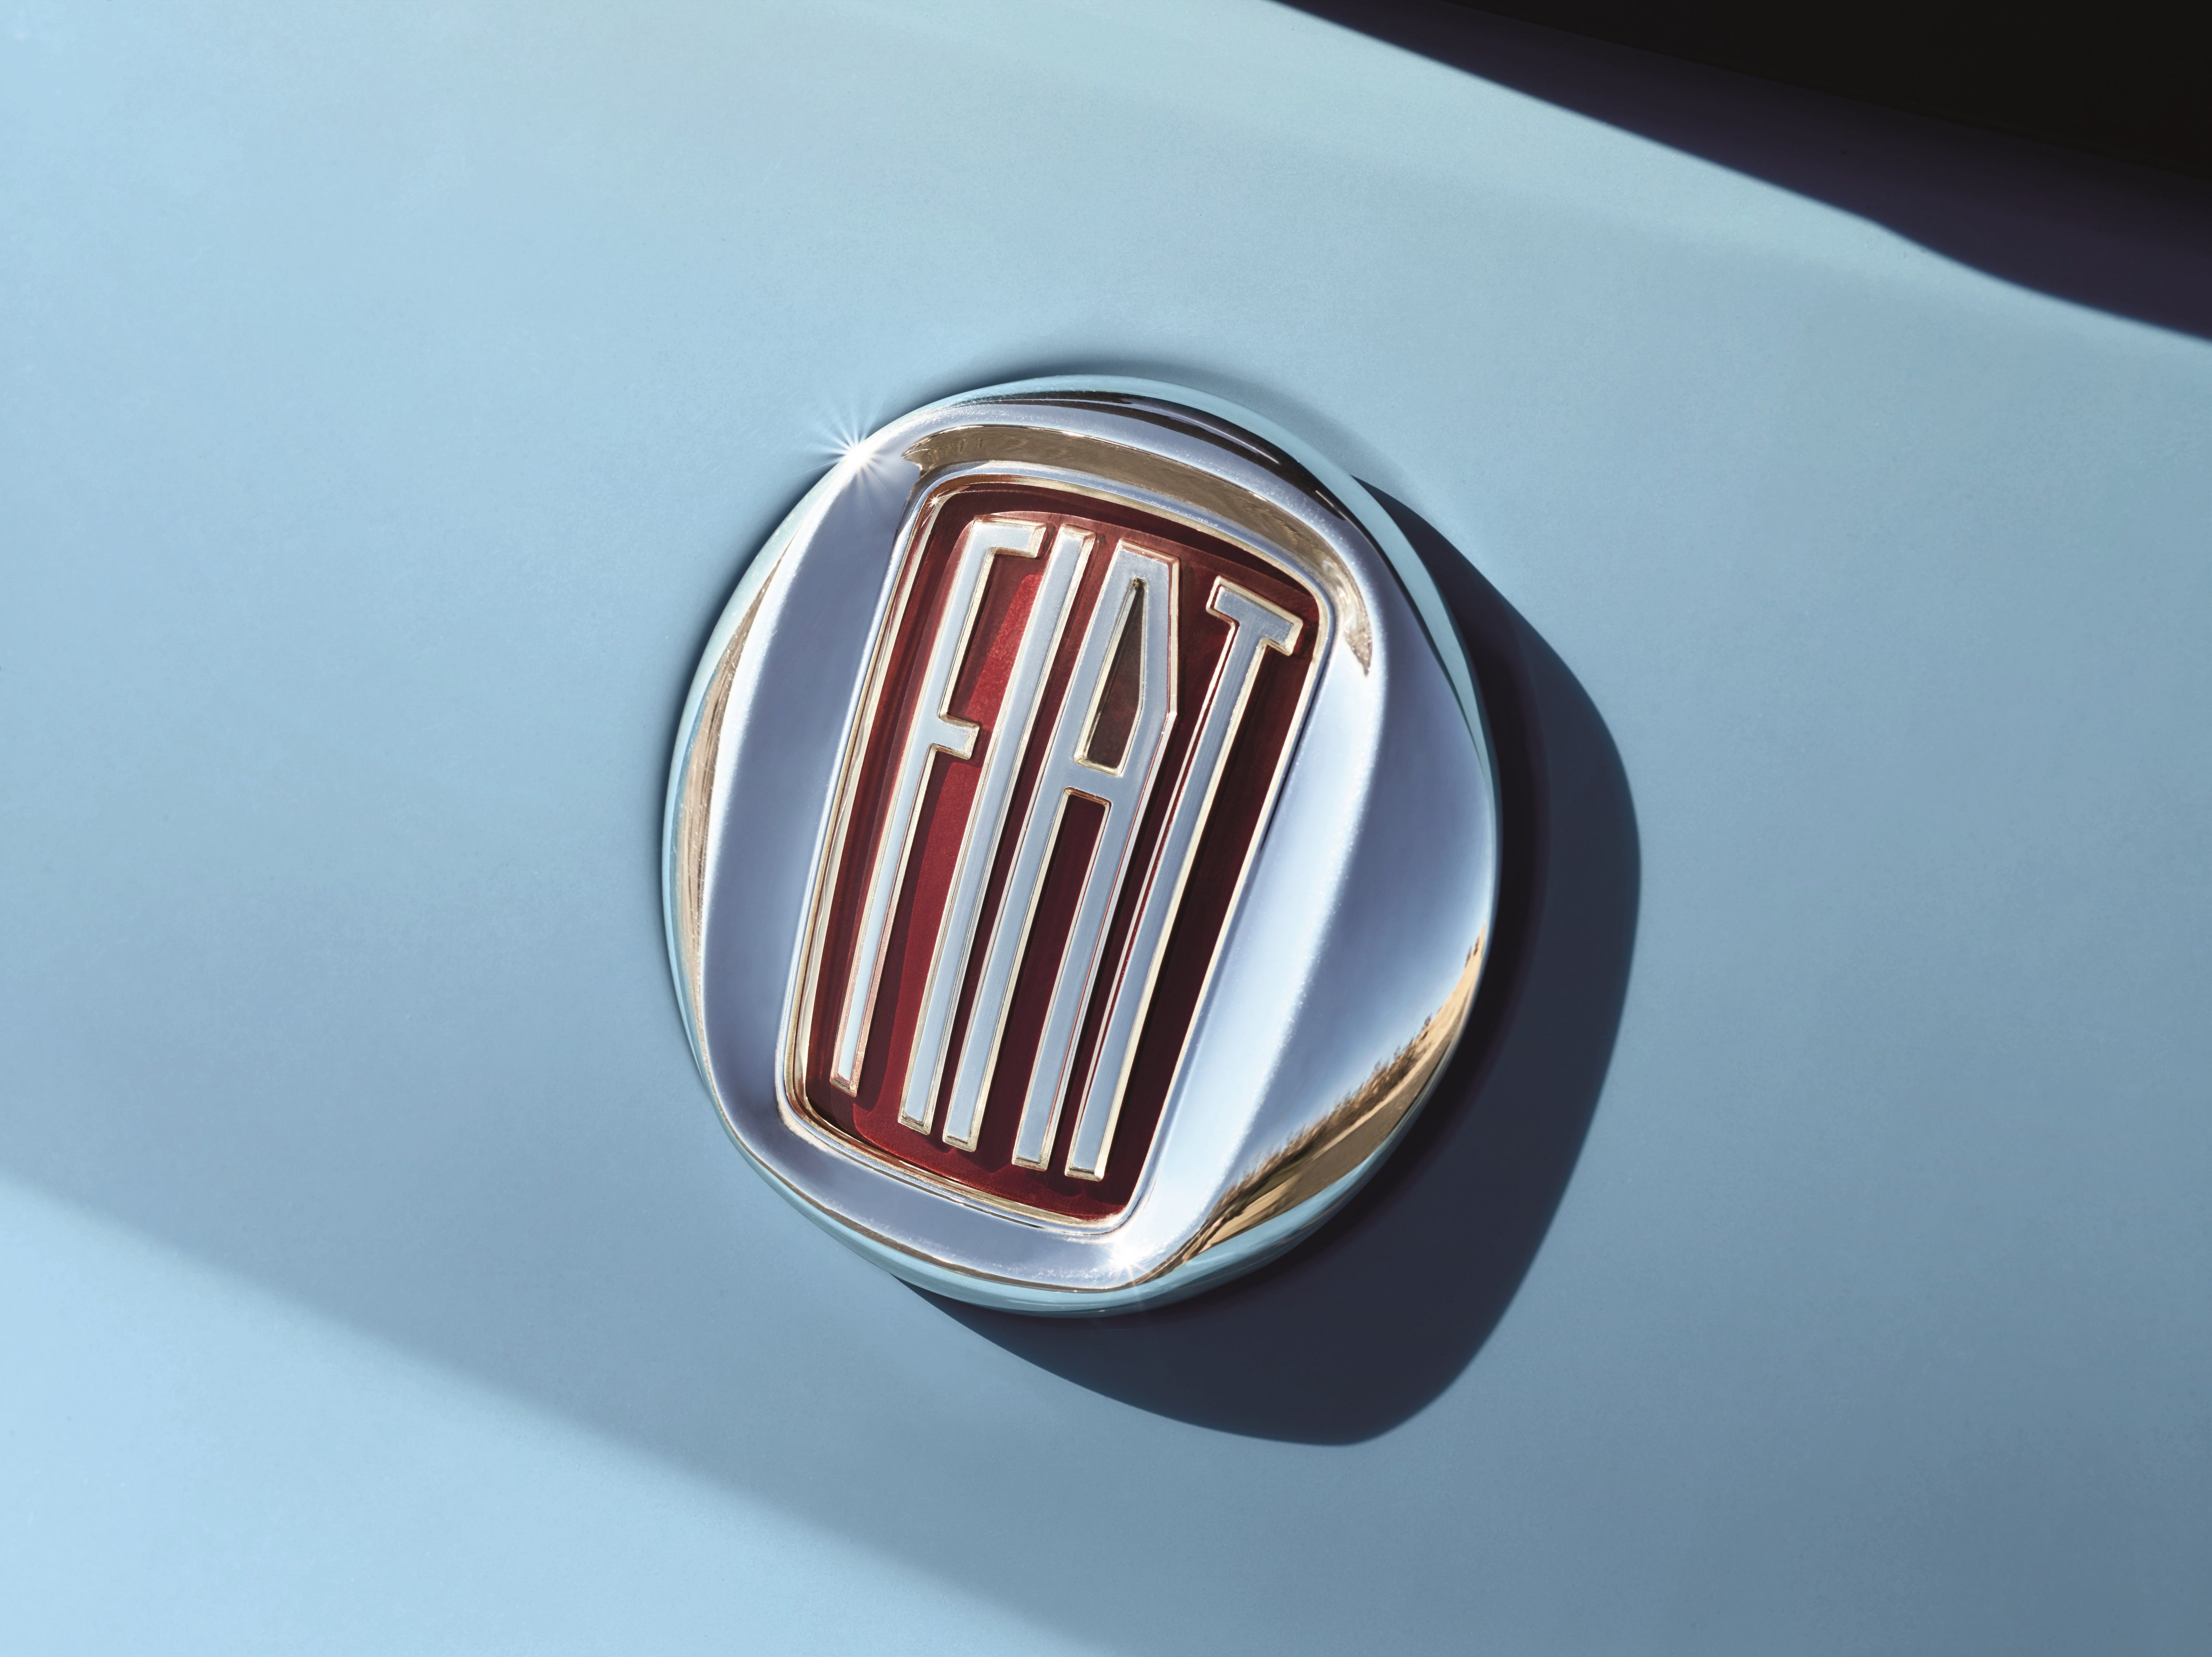 2018 Fiat 500 1957 Edition